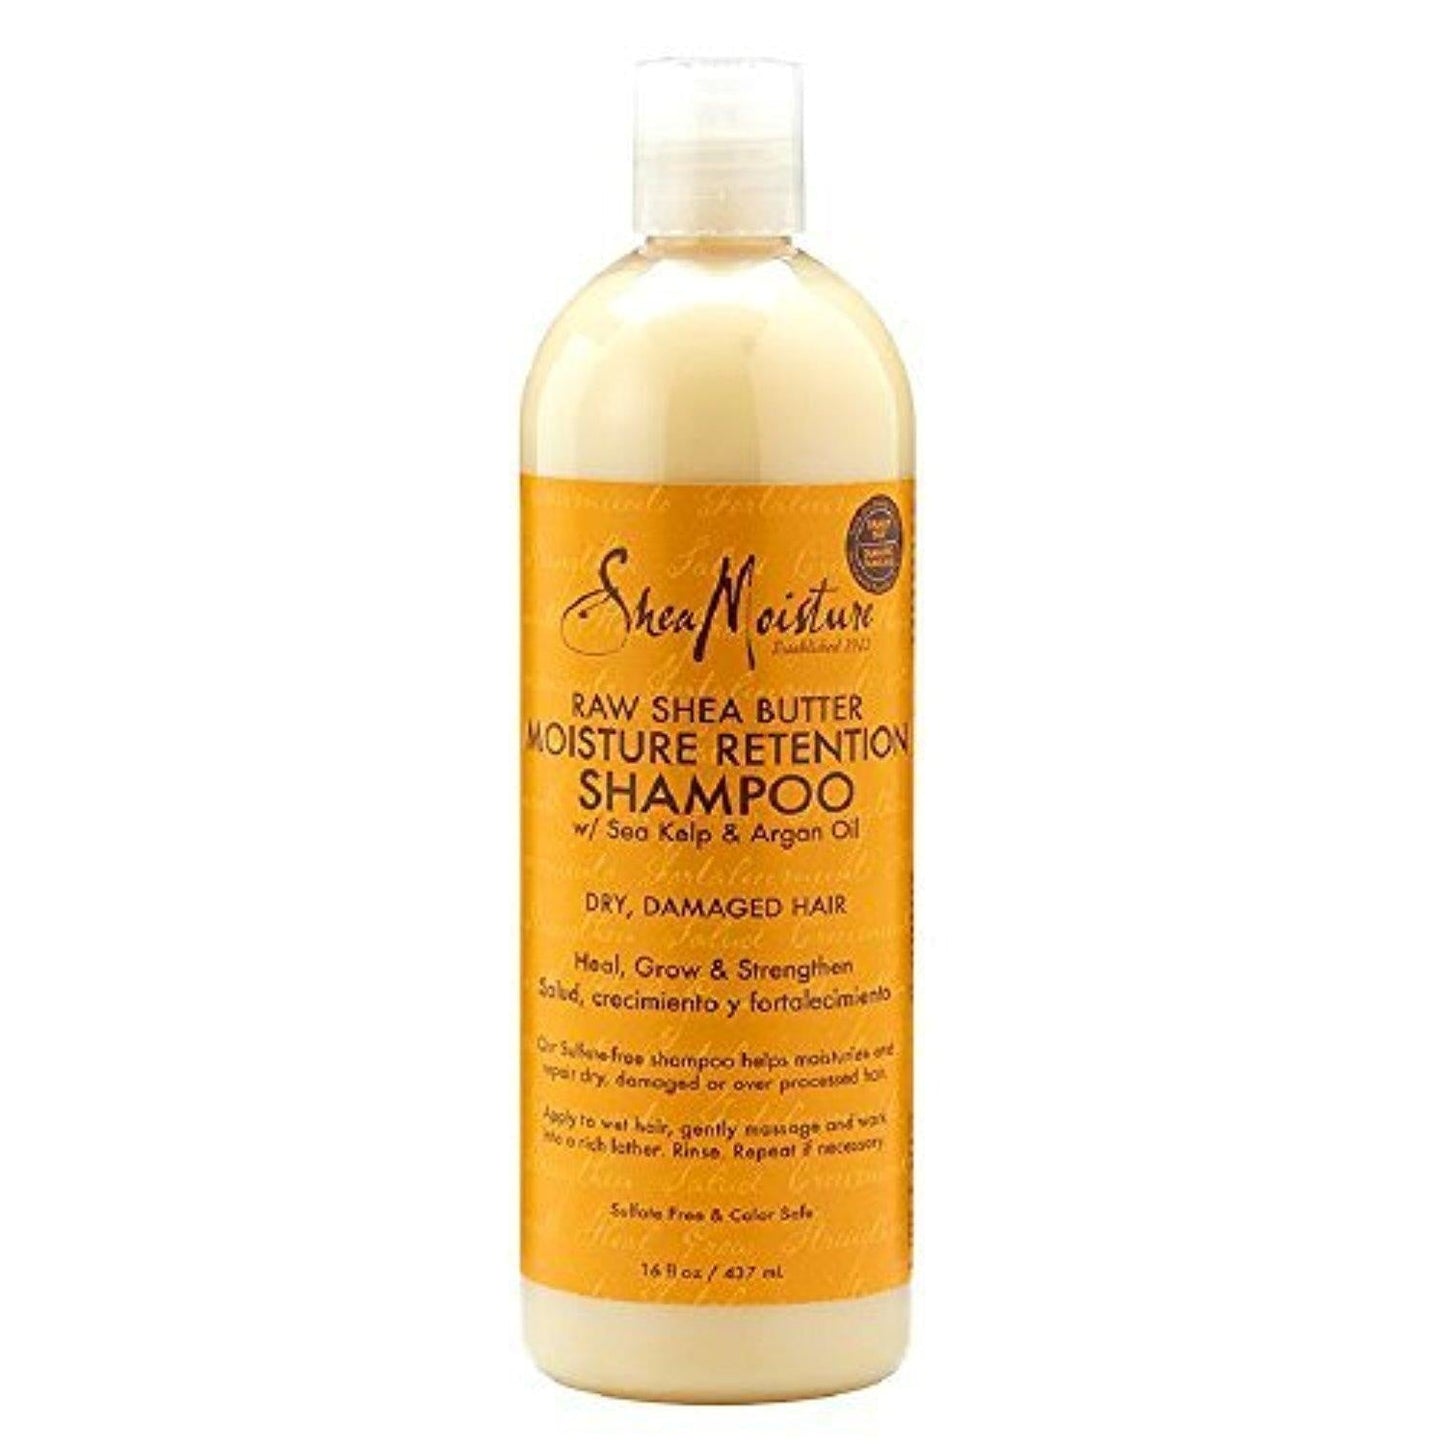 Shea Moisture - Raw Shea Butter Moisture Retention Shampoo 16fl/437ml